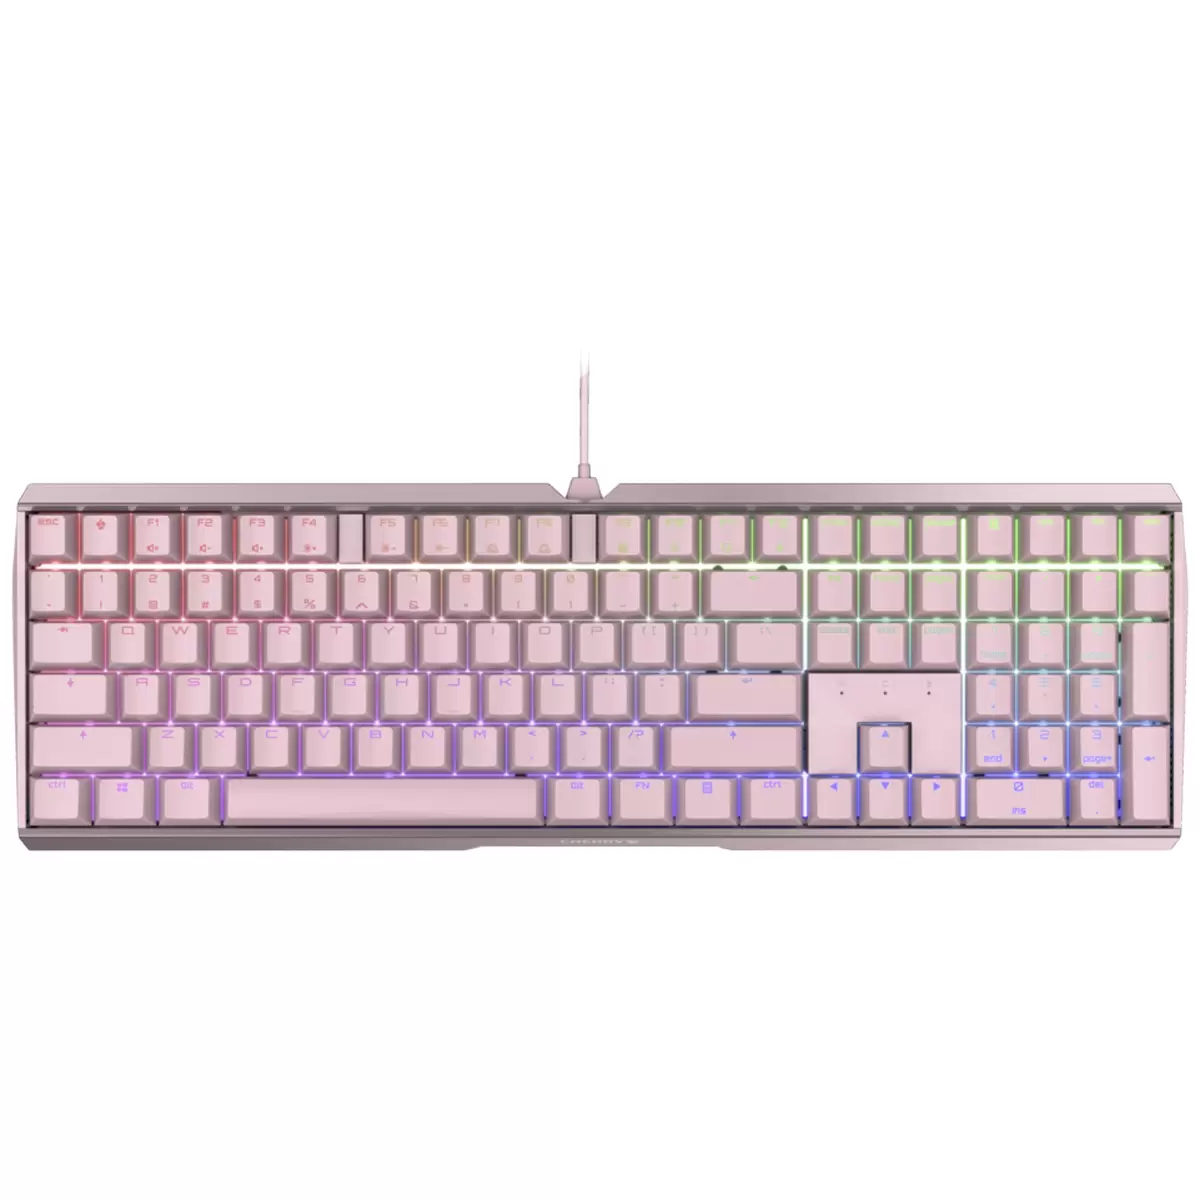 CHERRY MX 3.0S RGB Gaming Keyboard (Pink)  G80-3874HSAEU-9